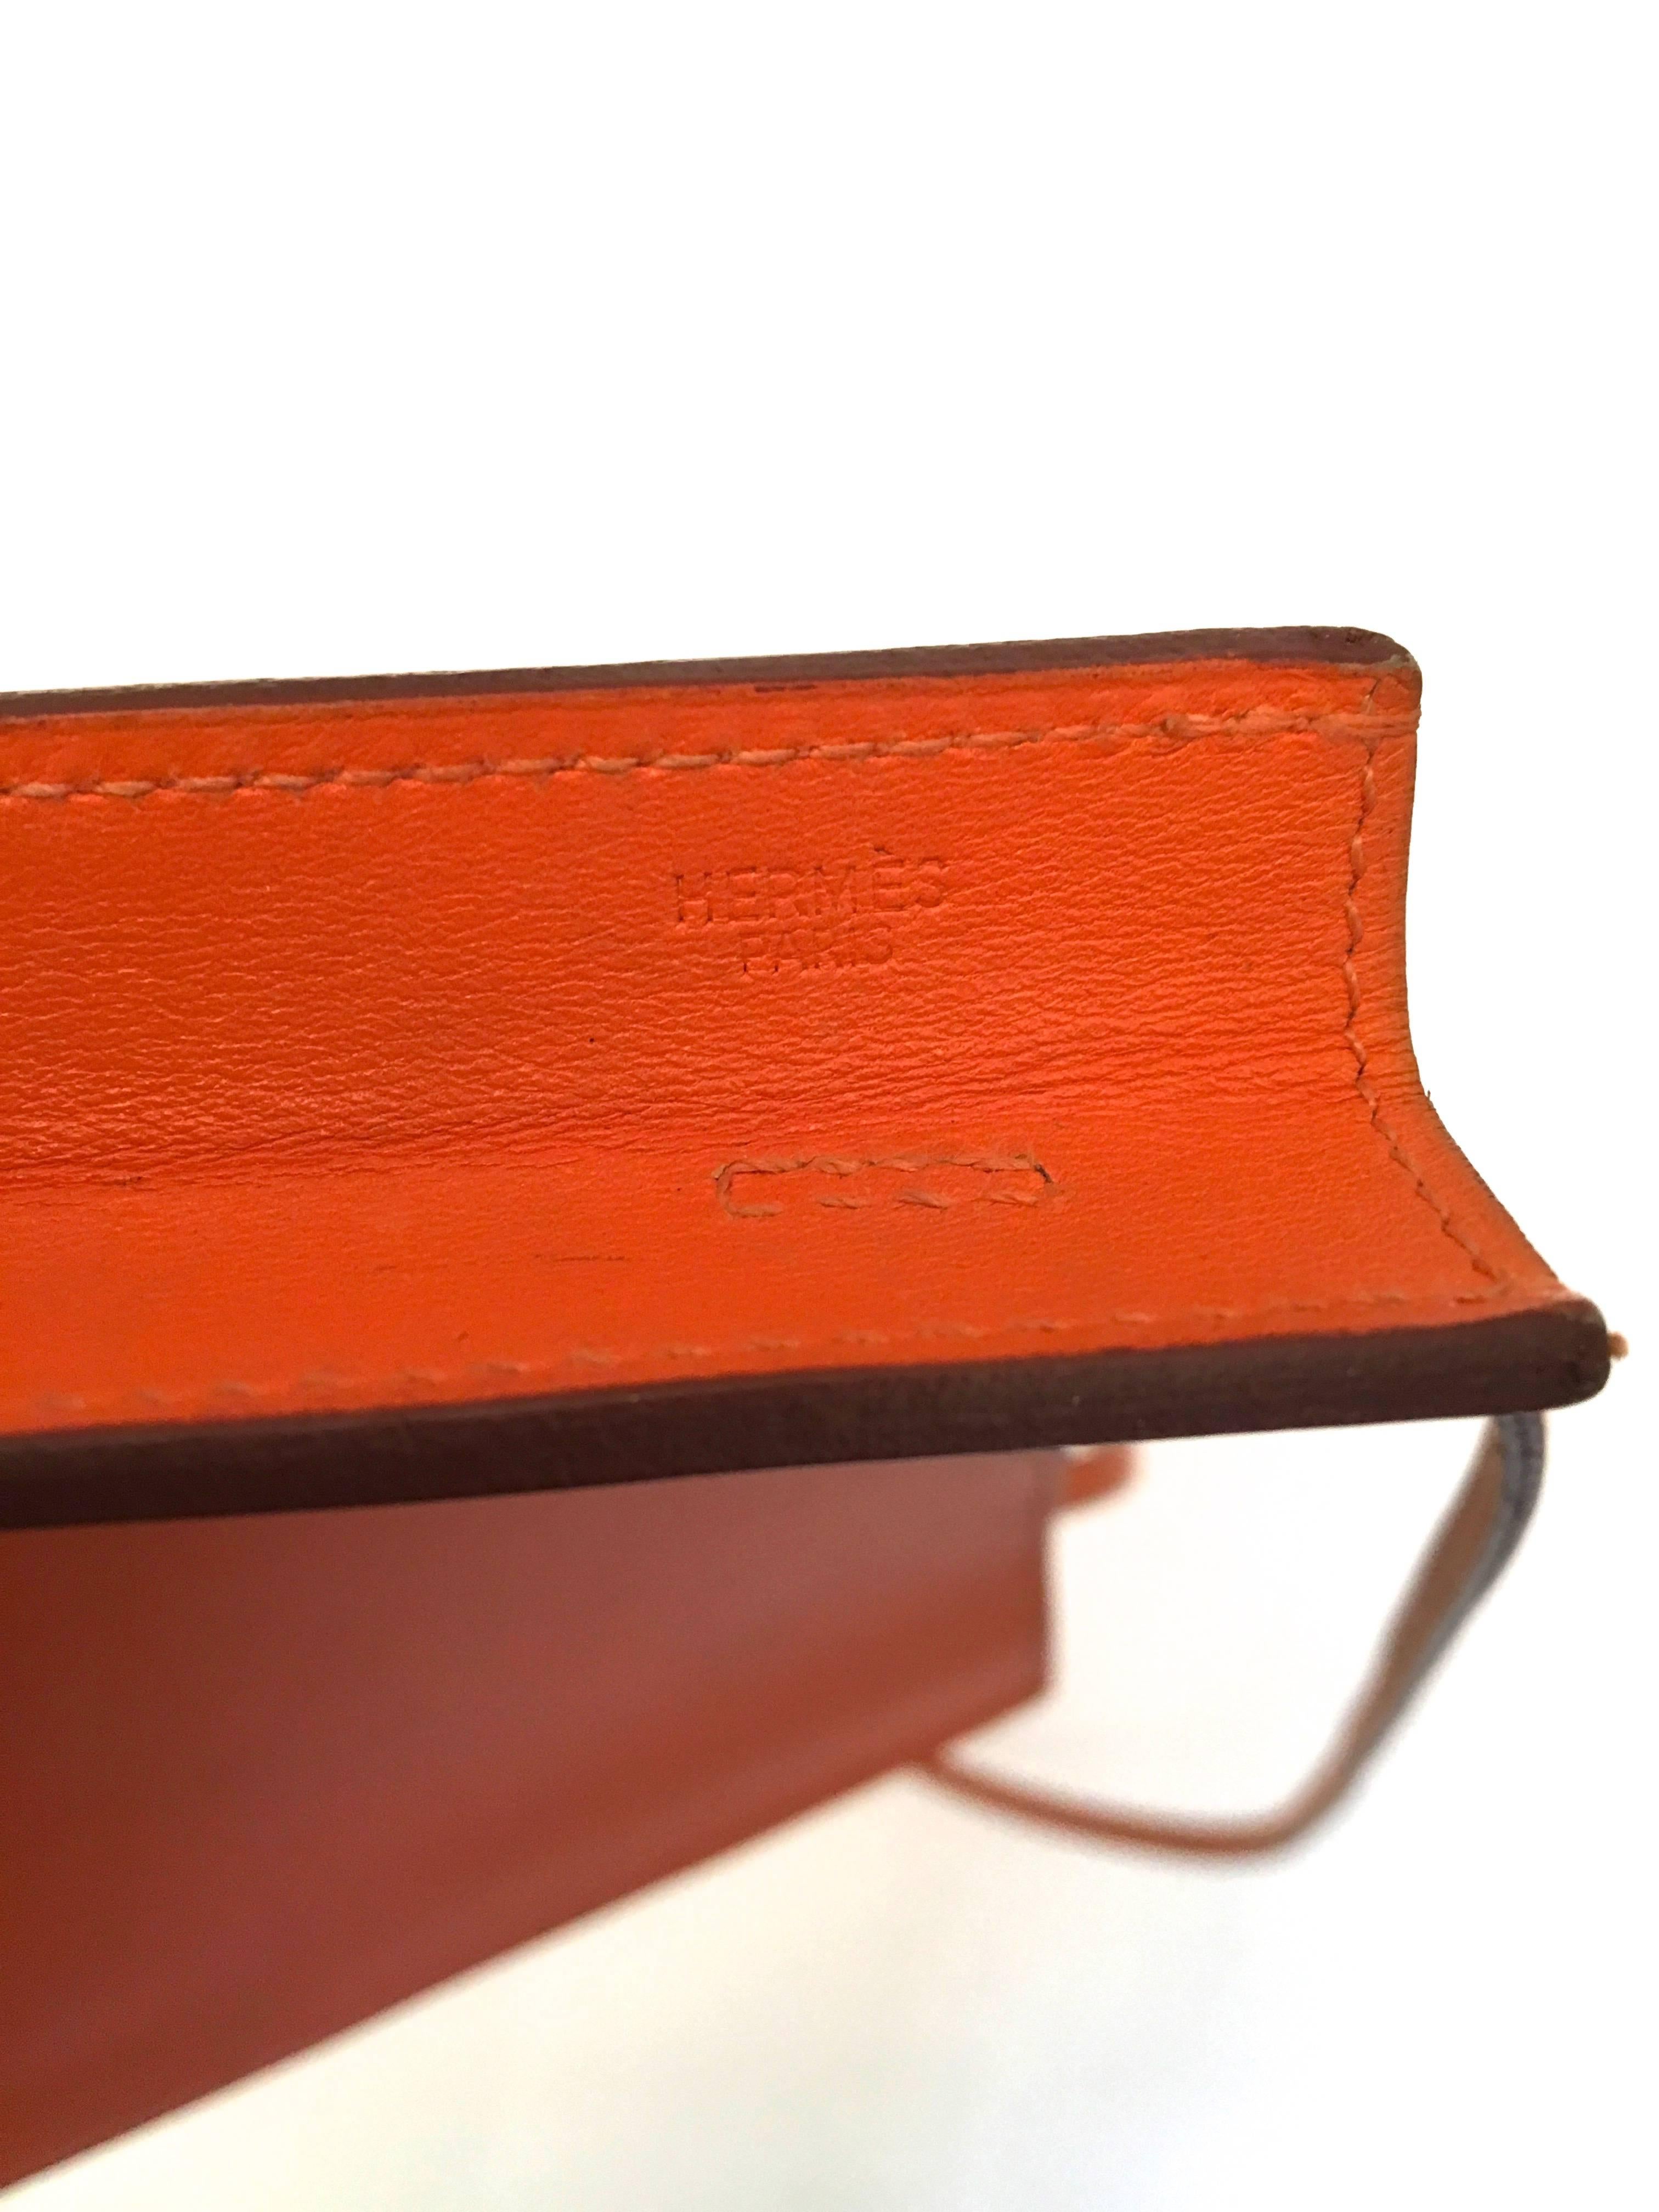 Hermes Orange Crossbody Bag In Excellent Condition For Sale In Boca Raton, FL